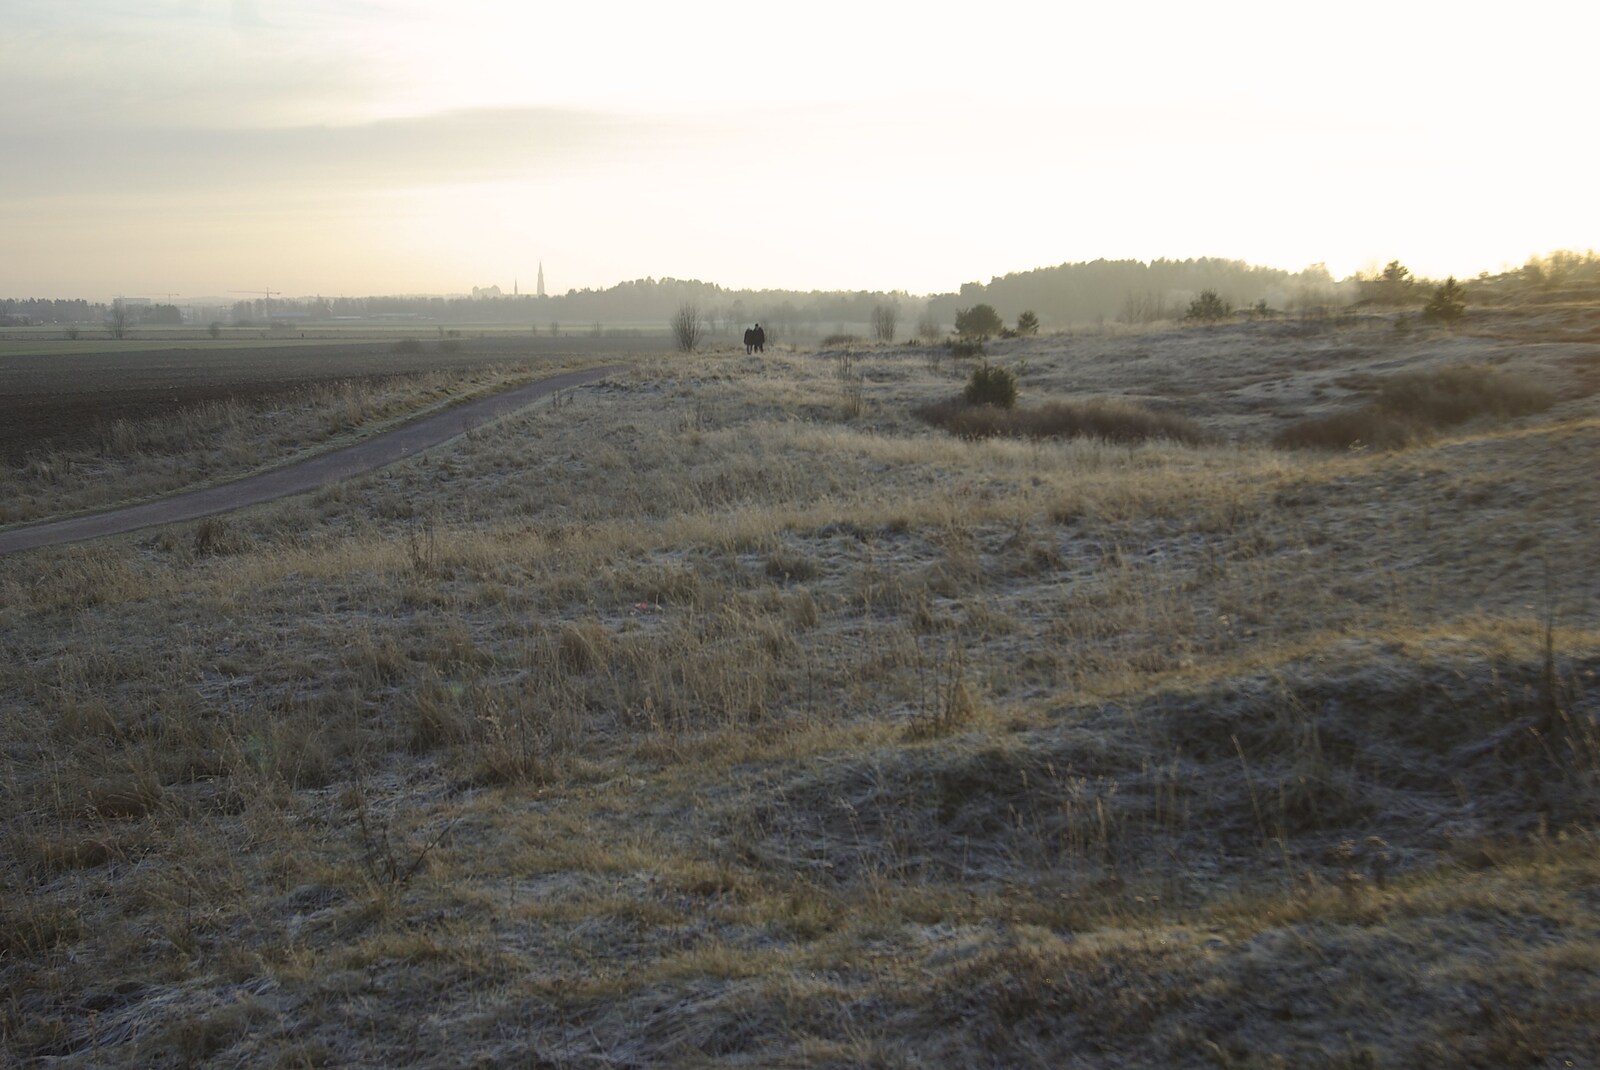 Another frozen scene from Gamla Uppsala, Uppsala County, Sweden - 16th December 2007